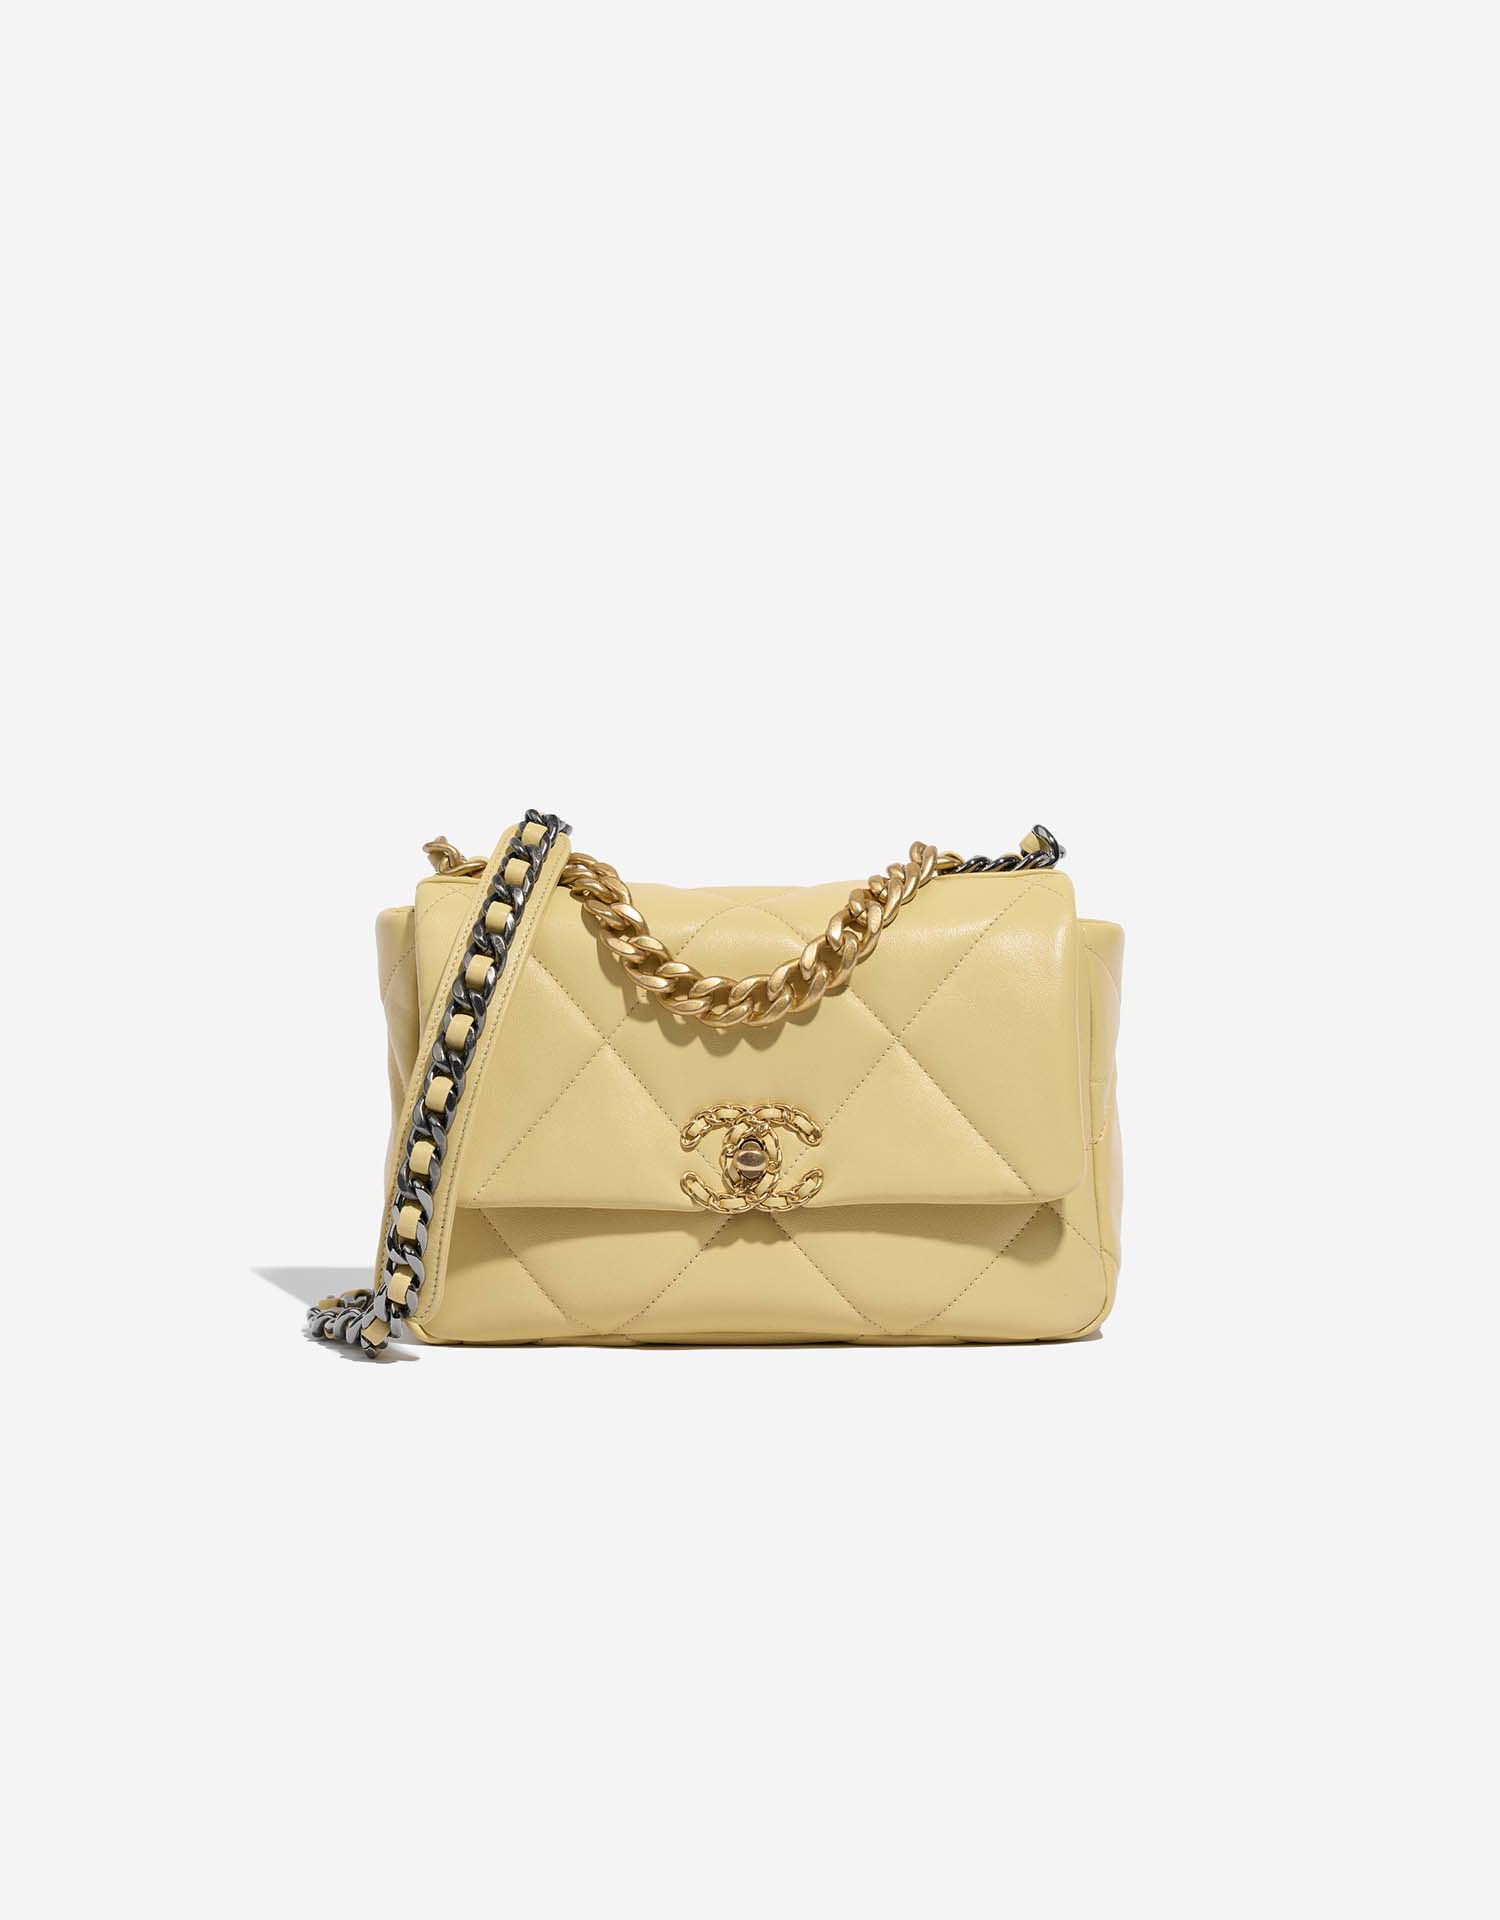 Chanel 19 Flap Bag Lamb Pastel Yellow